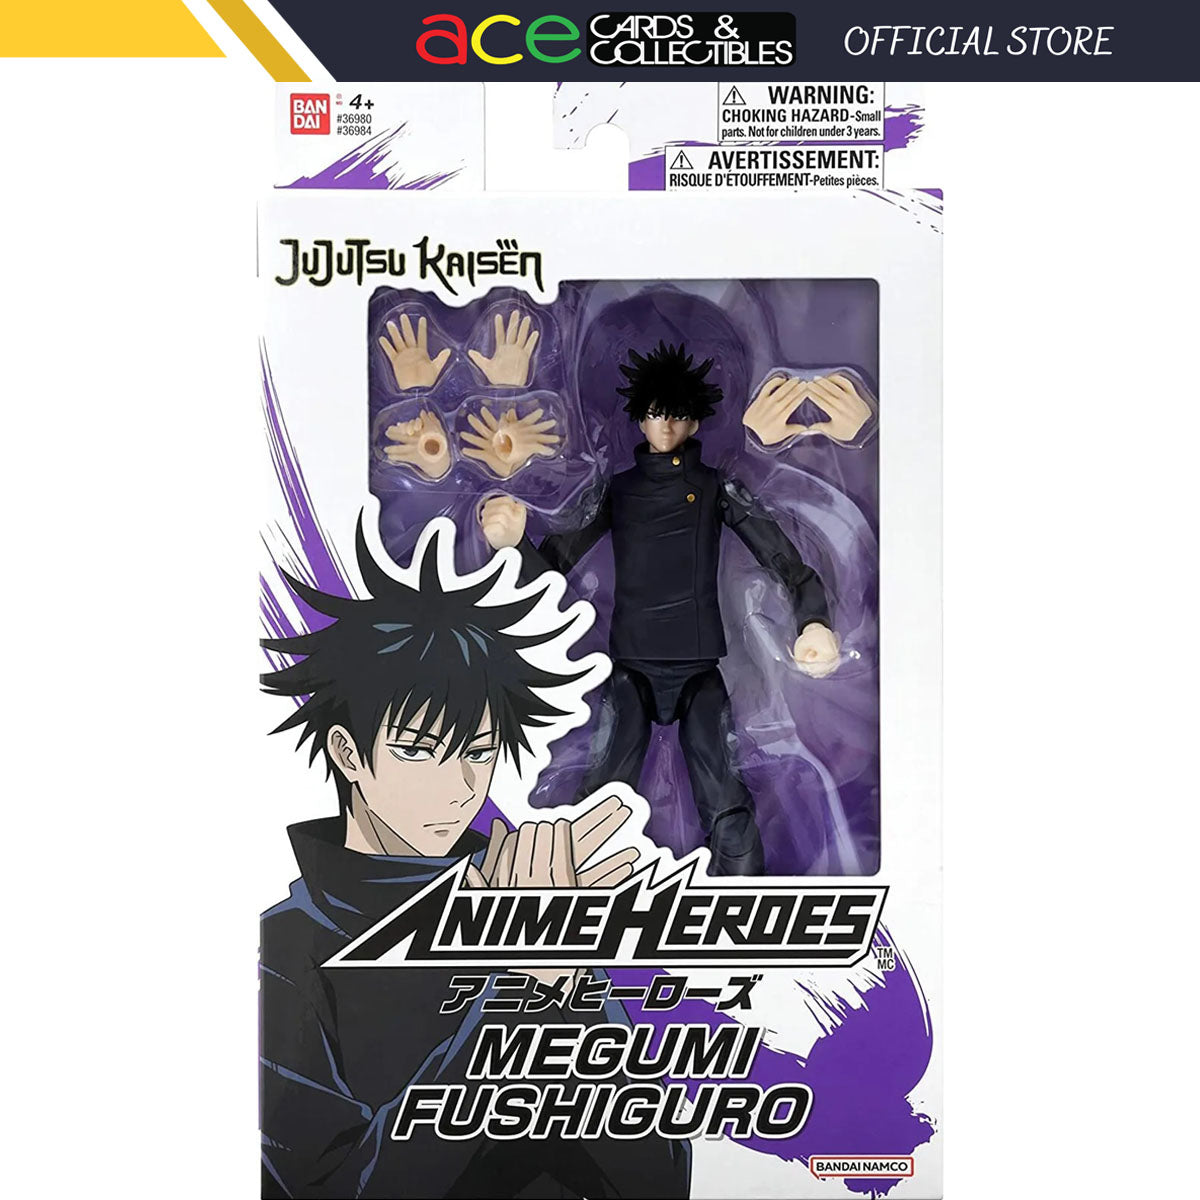 Jujutsu Kaisen Anime Heroes "Fushiguro Megumi" Action Figure-Bandai-Ace Cards & Collectibles